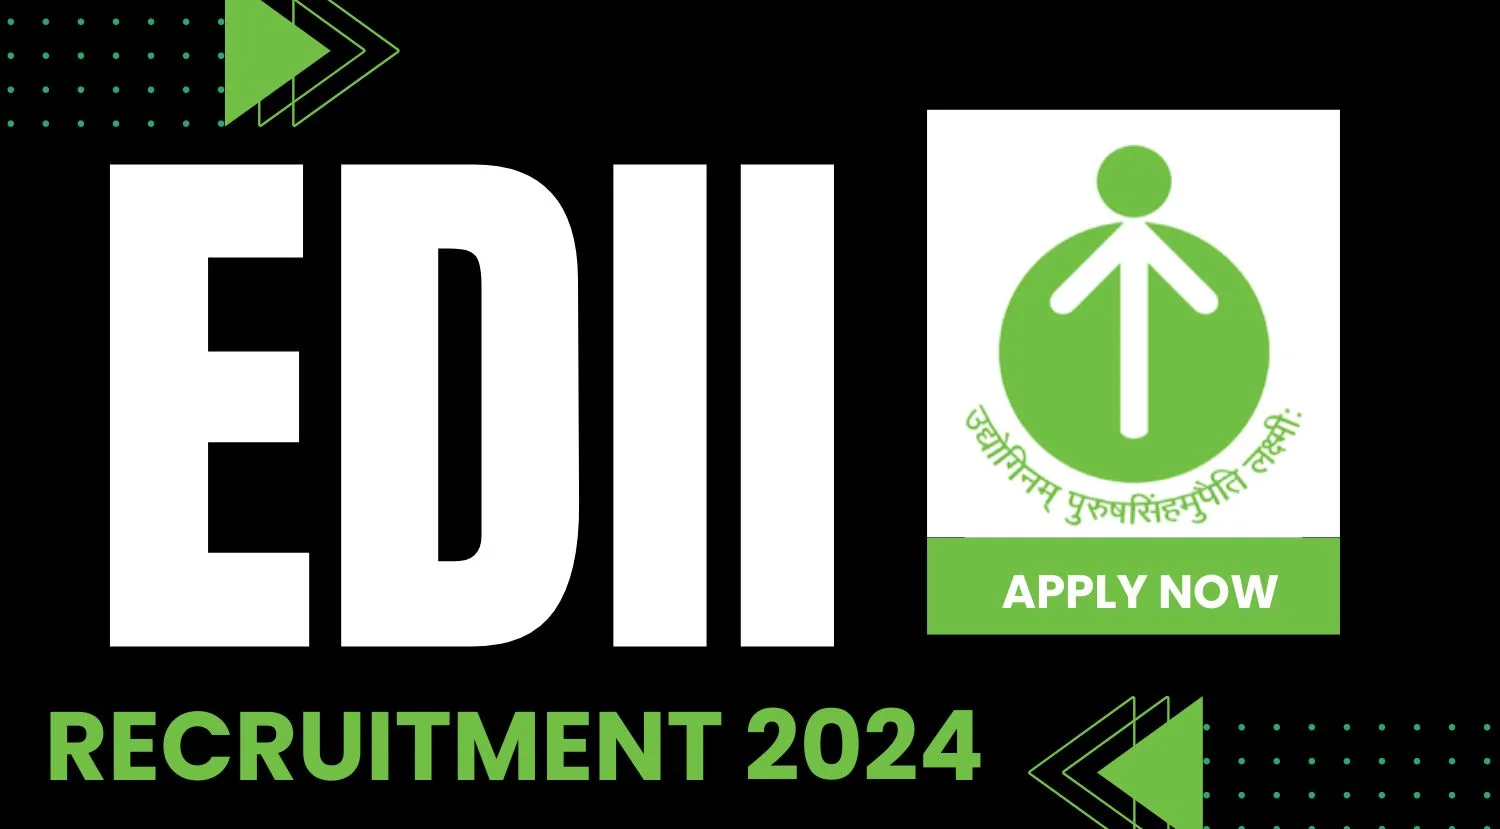 EDII Multimedia Executive Recruitment 2024